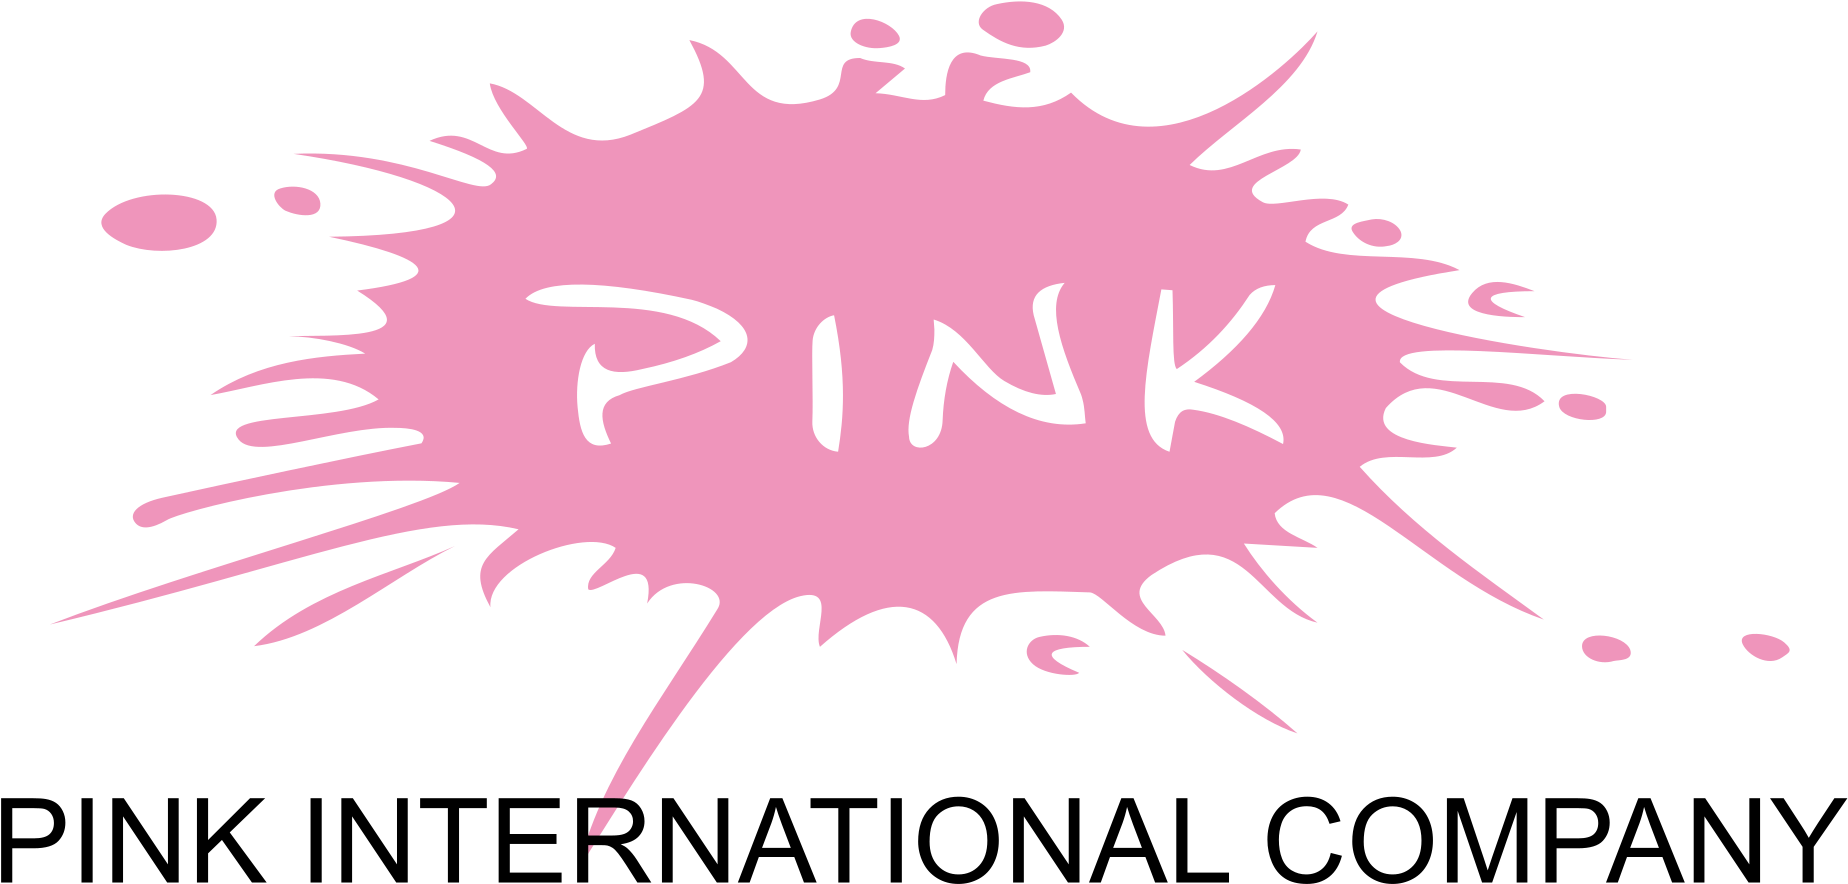 Download Pink Logo Best Cars Png Victoria Secret Pink Love Svg Png Image With No Background Pngkey Com